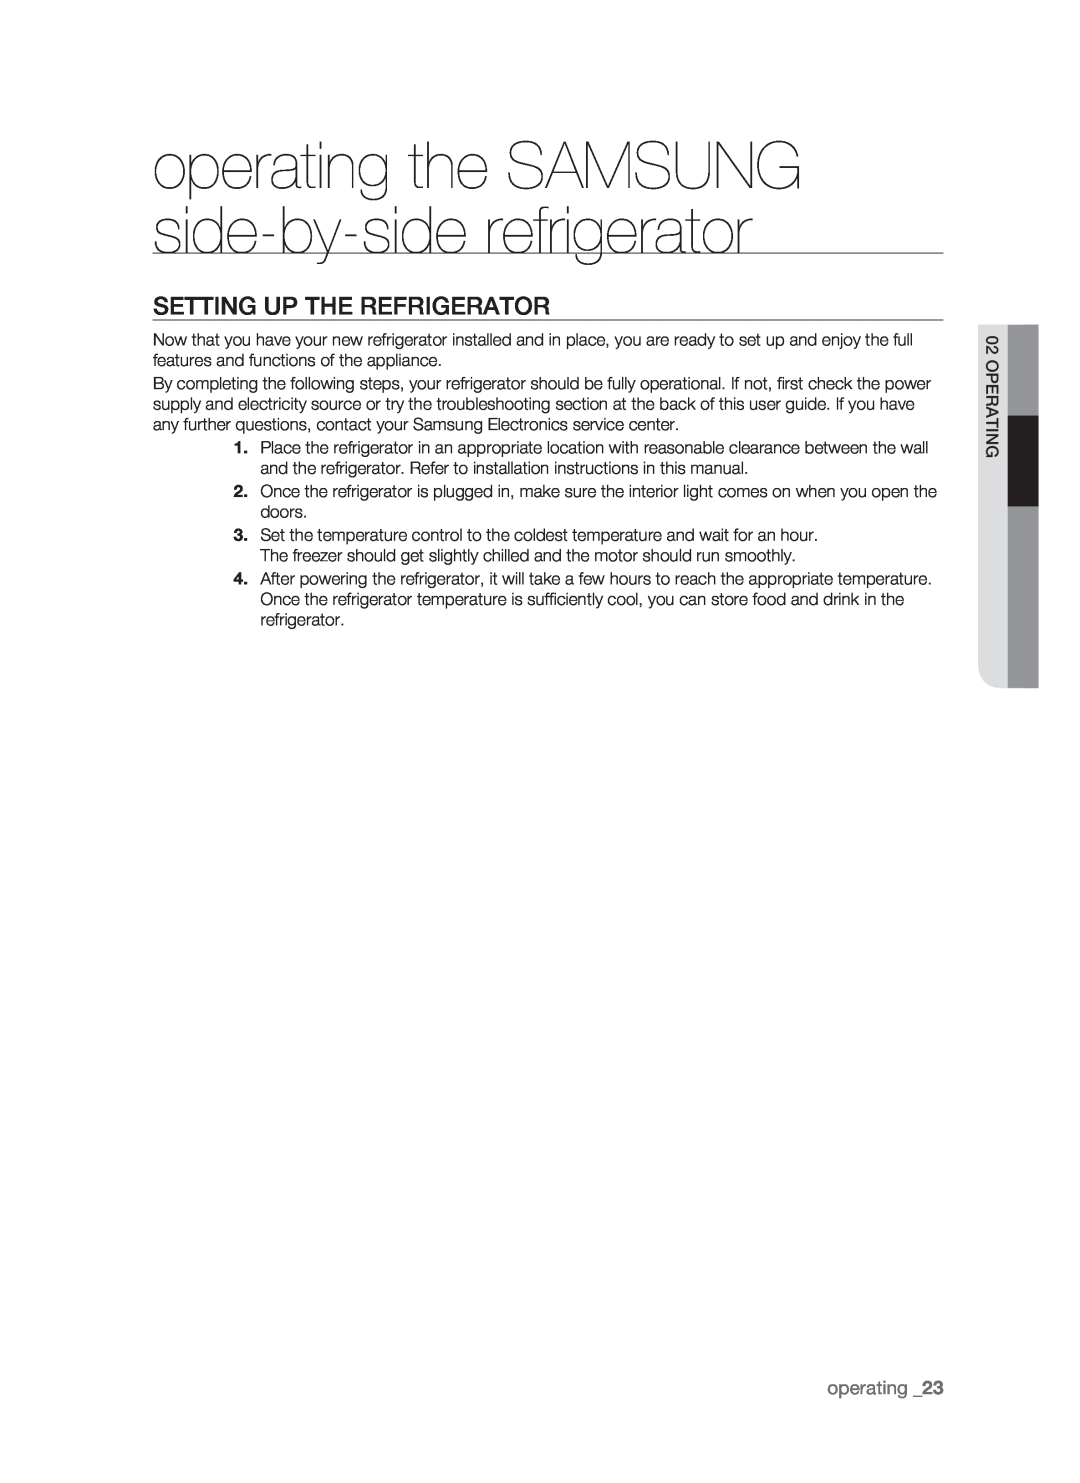 Samsung RSH1J, SRS610HDSS, RSH1K, RSH1N, RSH1B operating the SAMSUNG side-by-side refrigerator, Setting up the refrigerator 